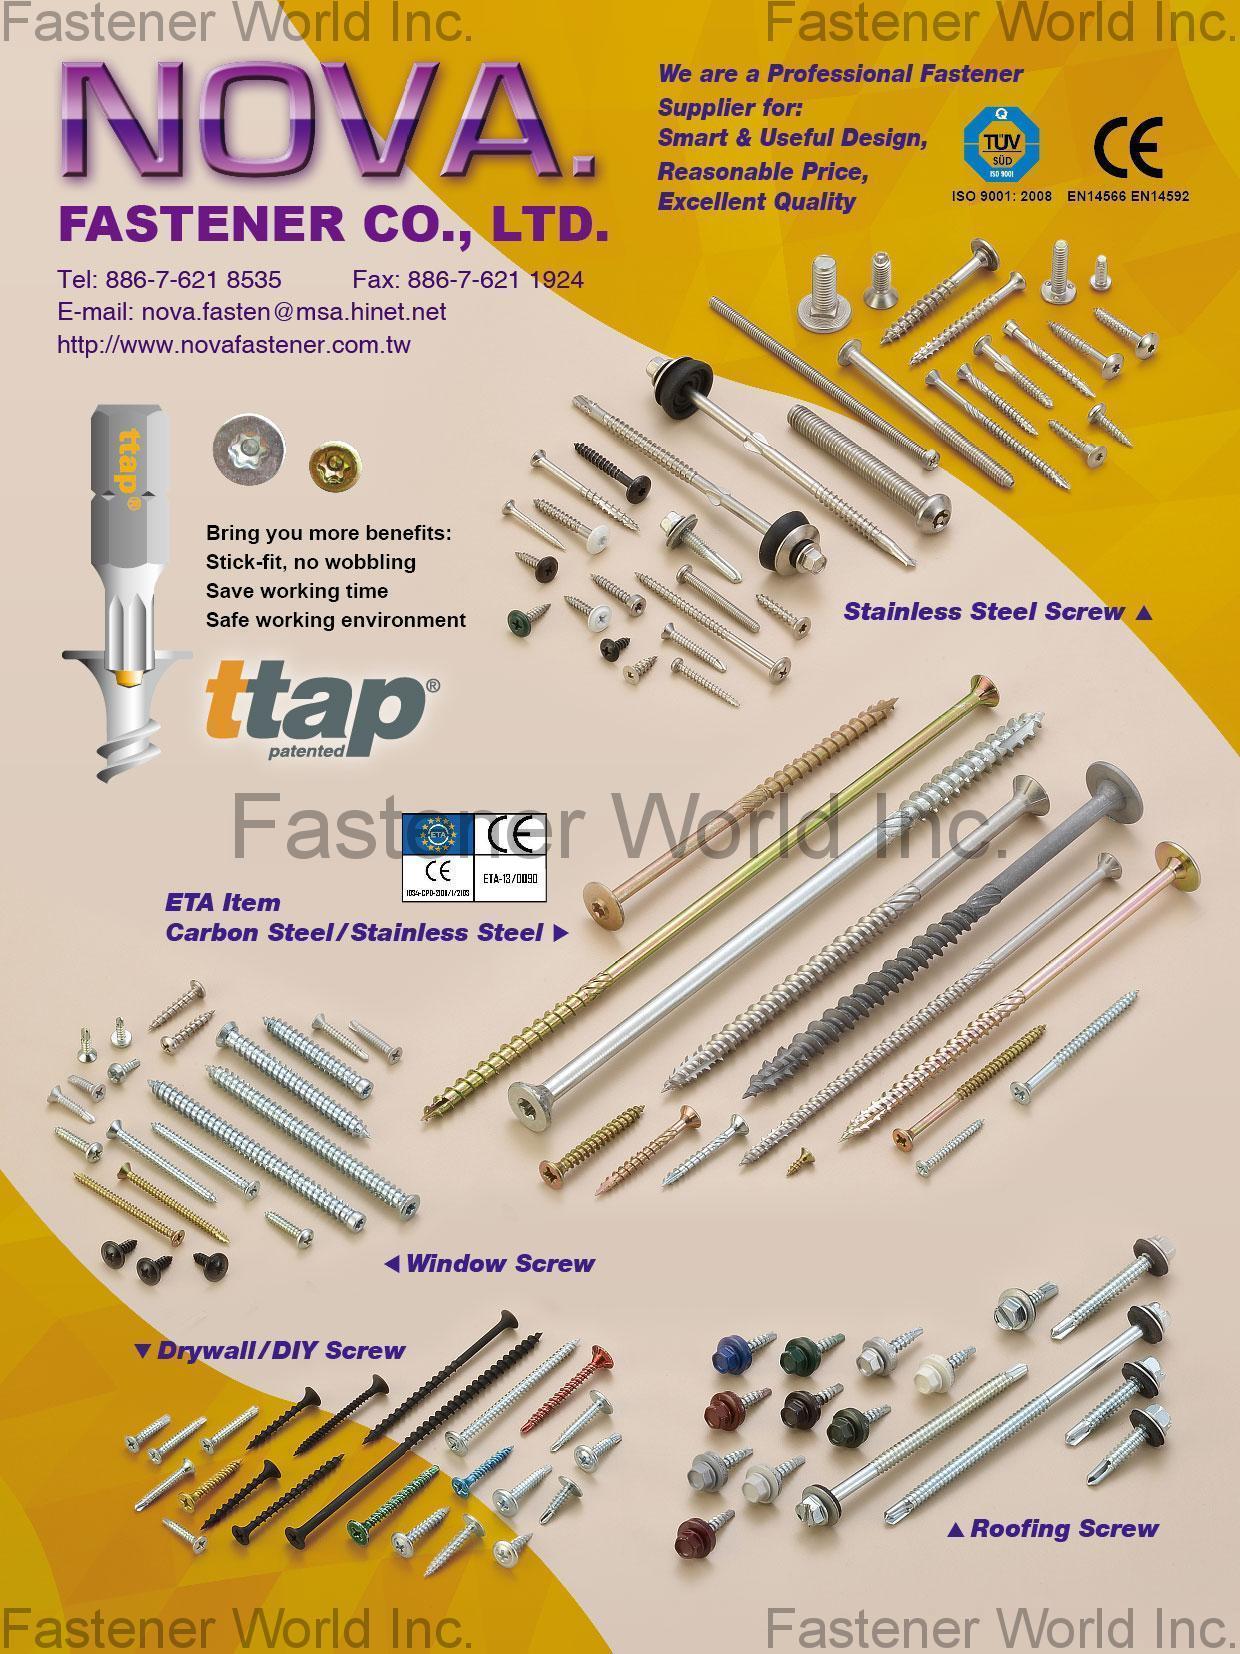 NOVA. FASTENER CO., LTD.  , ttap panted, Composite Screw, Long Size Screw, Stainless Steel Screw , Stainless Steel Screws